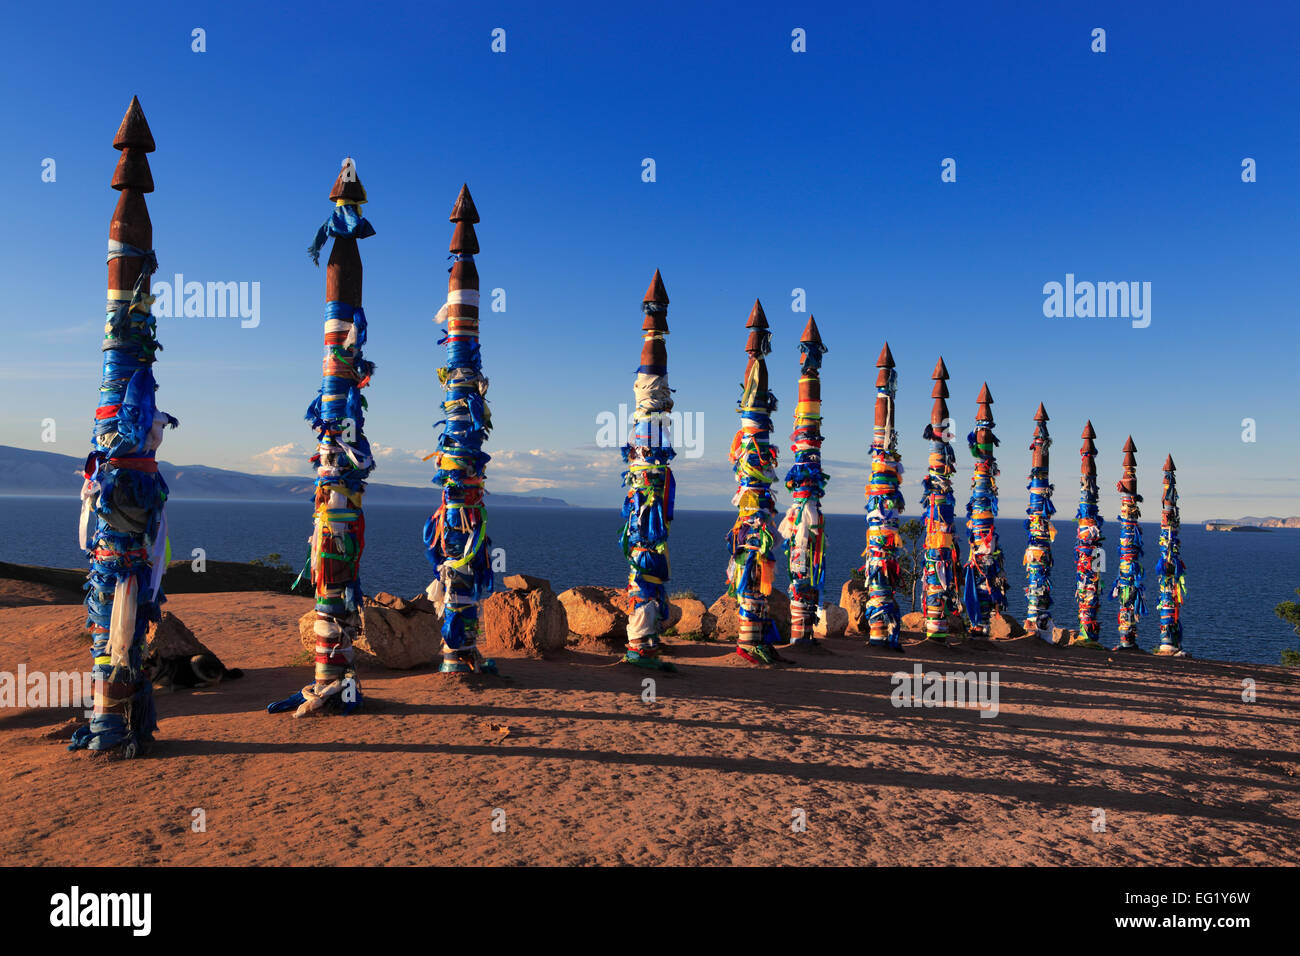 Totem poles, Olkhon island, landscape near Khuzhir, Baikal lake, Russia Stock Photo